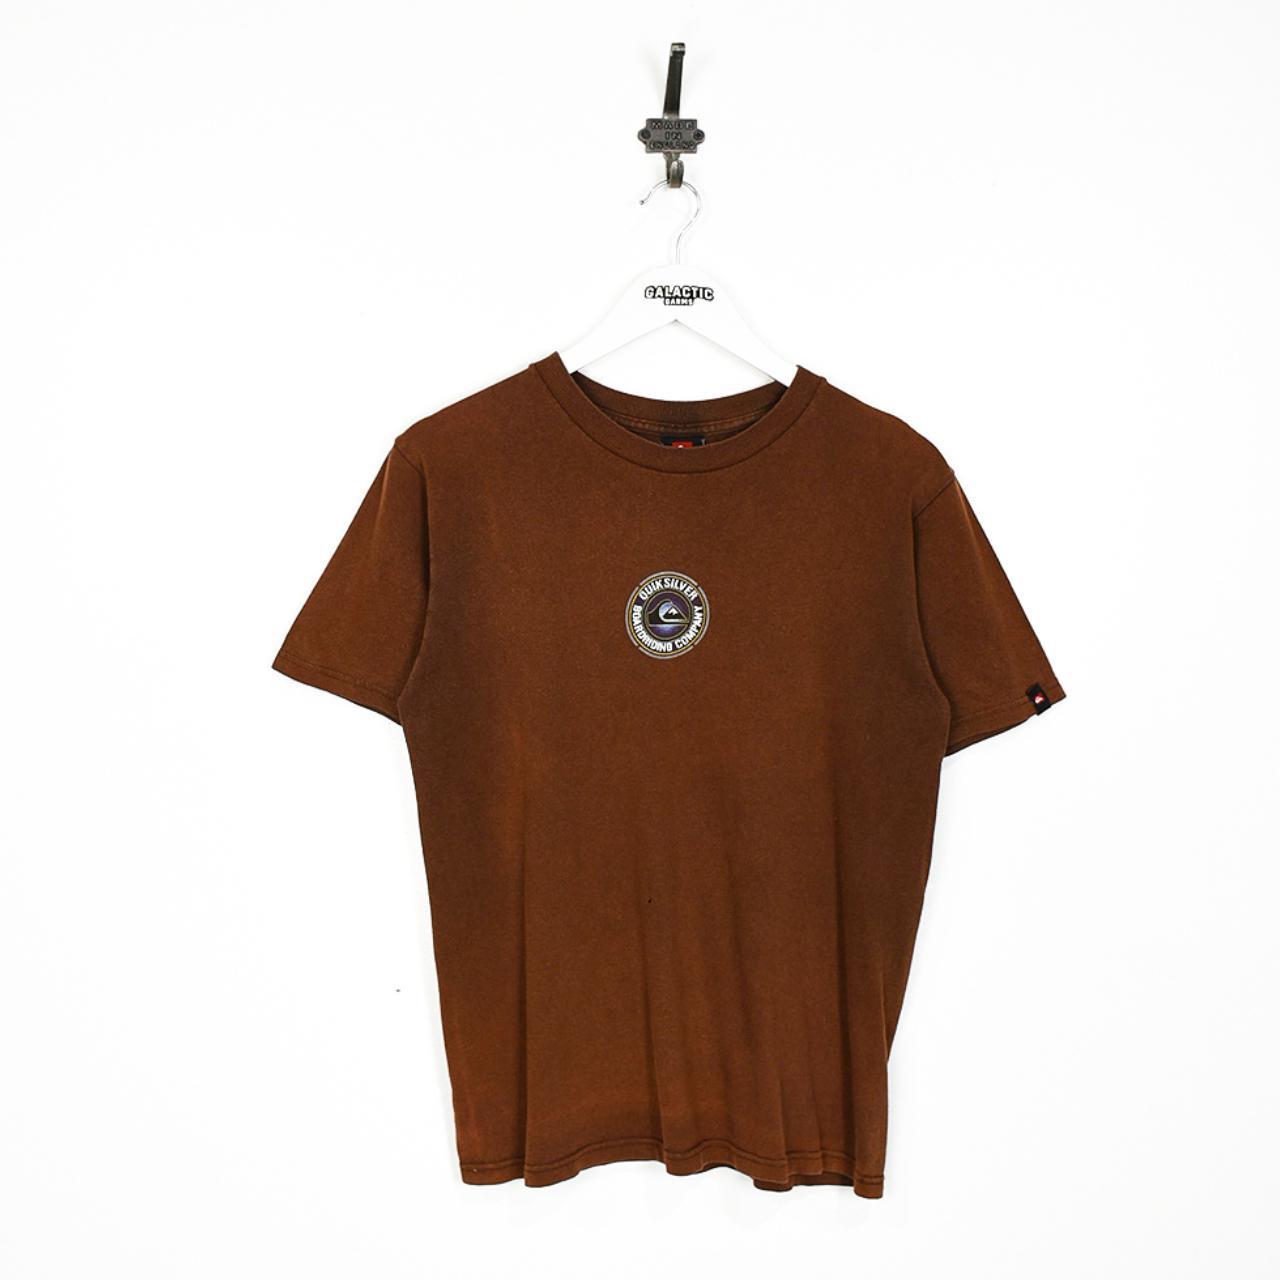 Quiksilver Men's Brown and Black T-shirt (2)